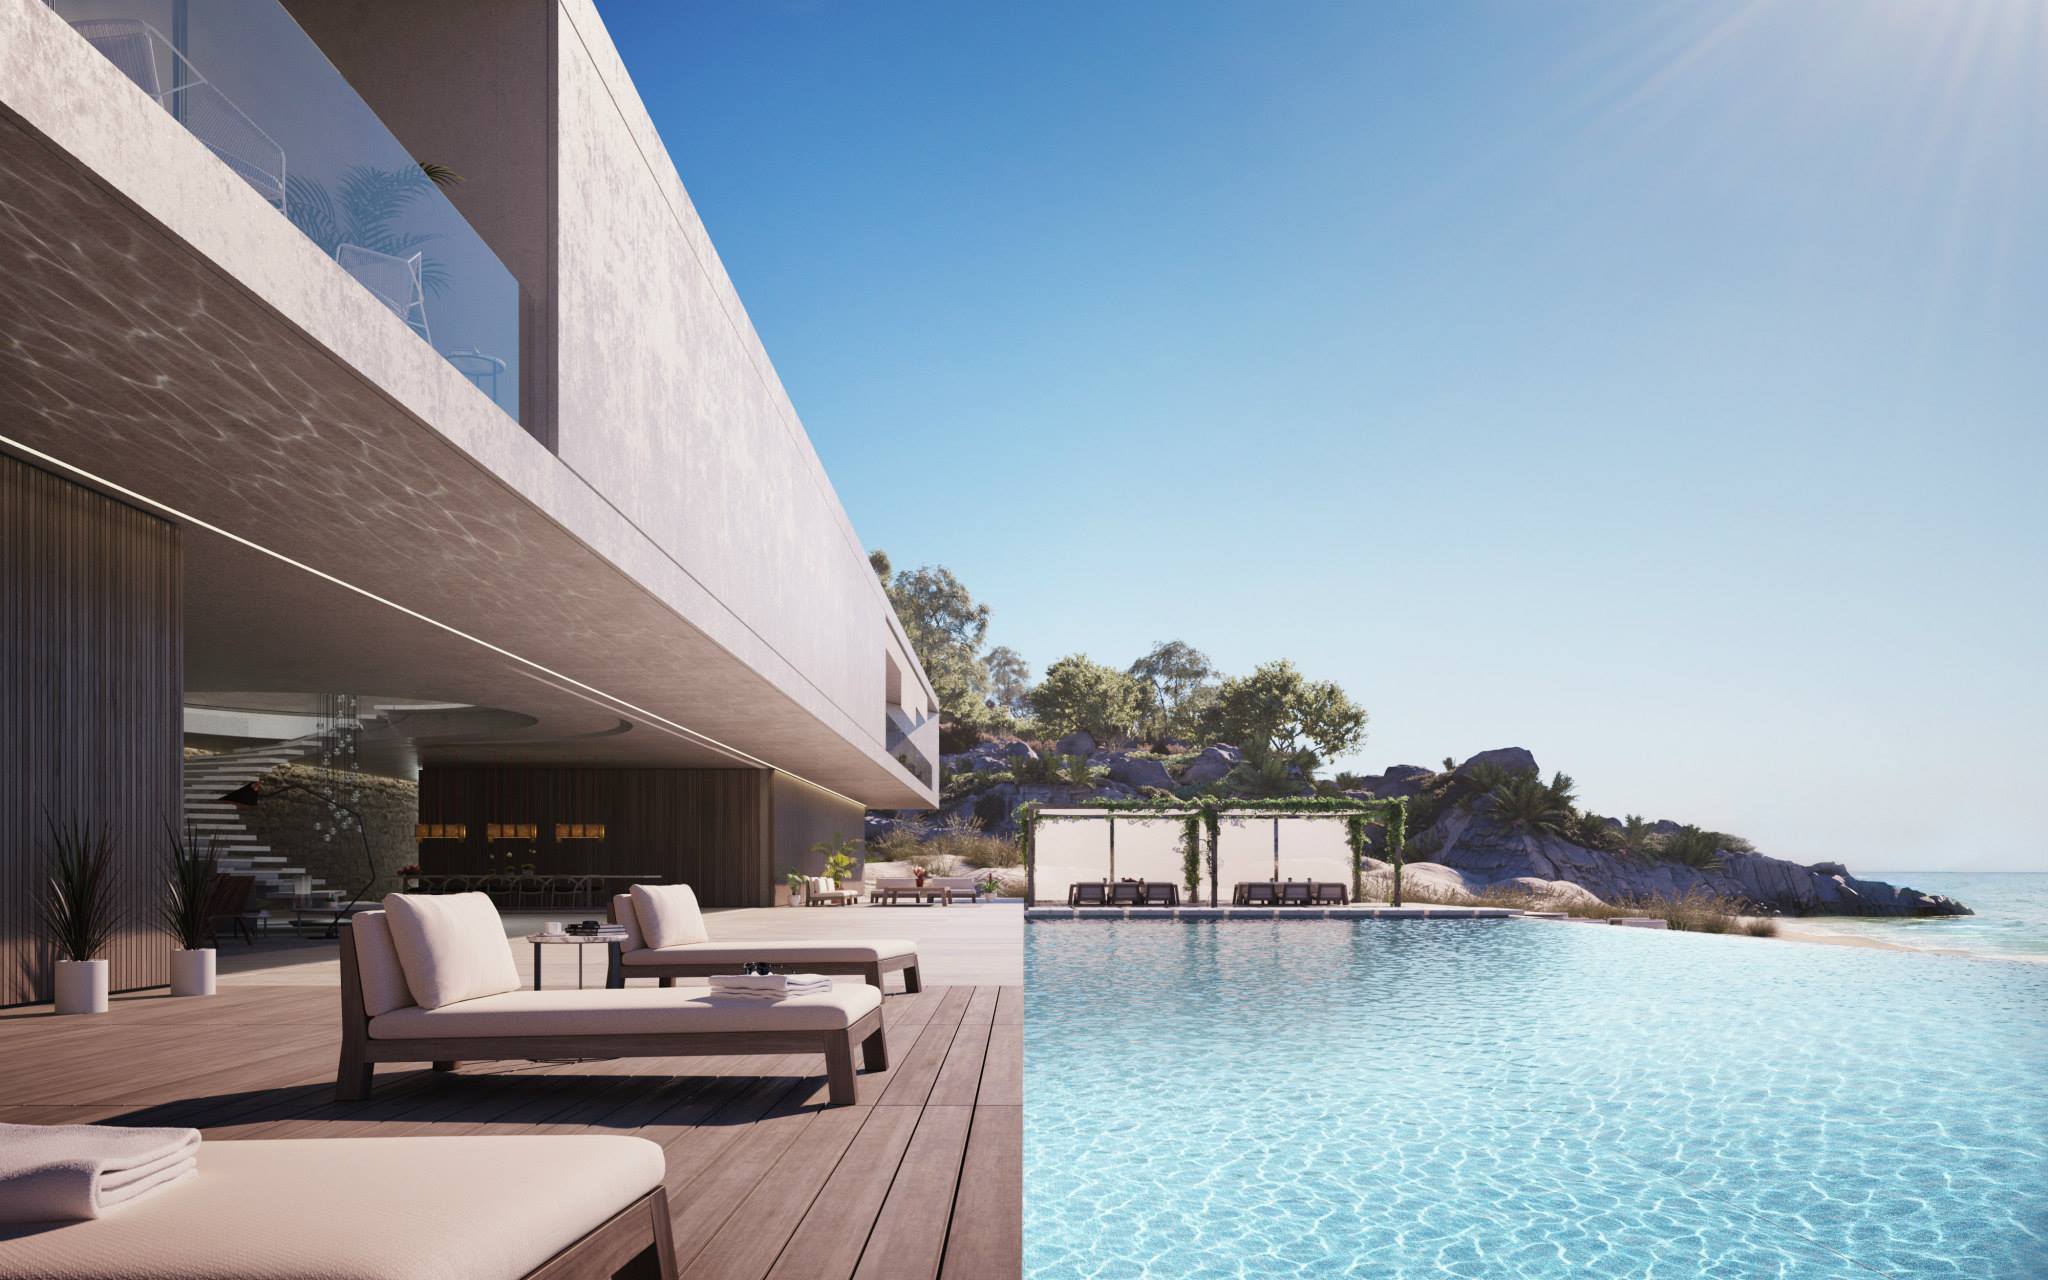 Superhouse - terrace pool